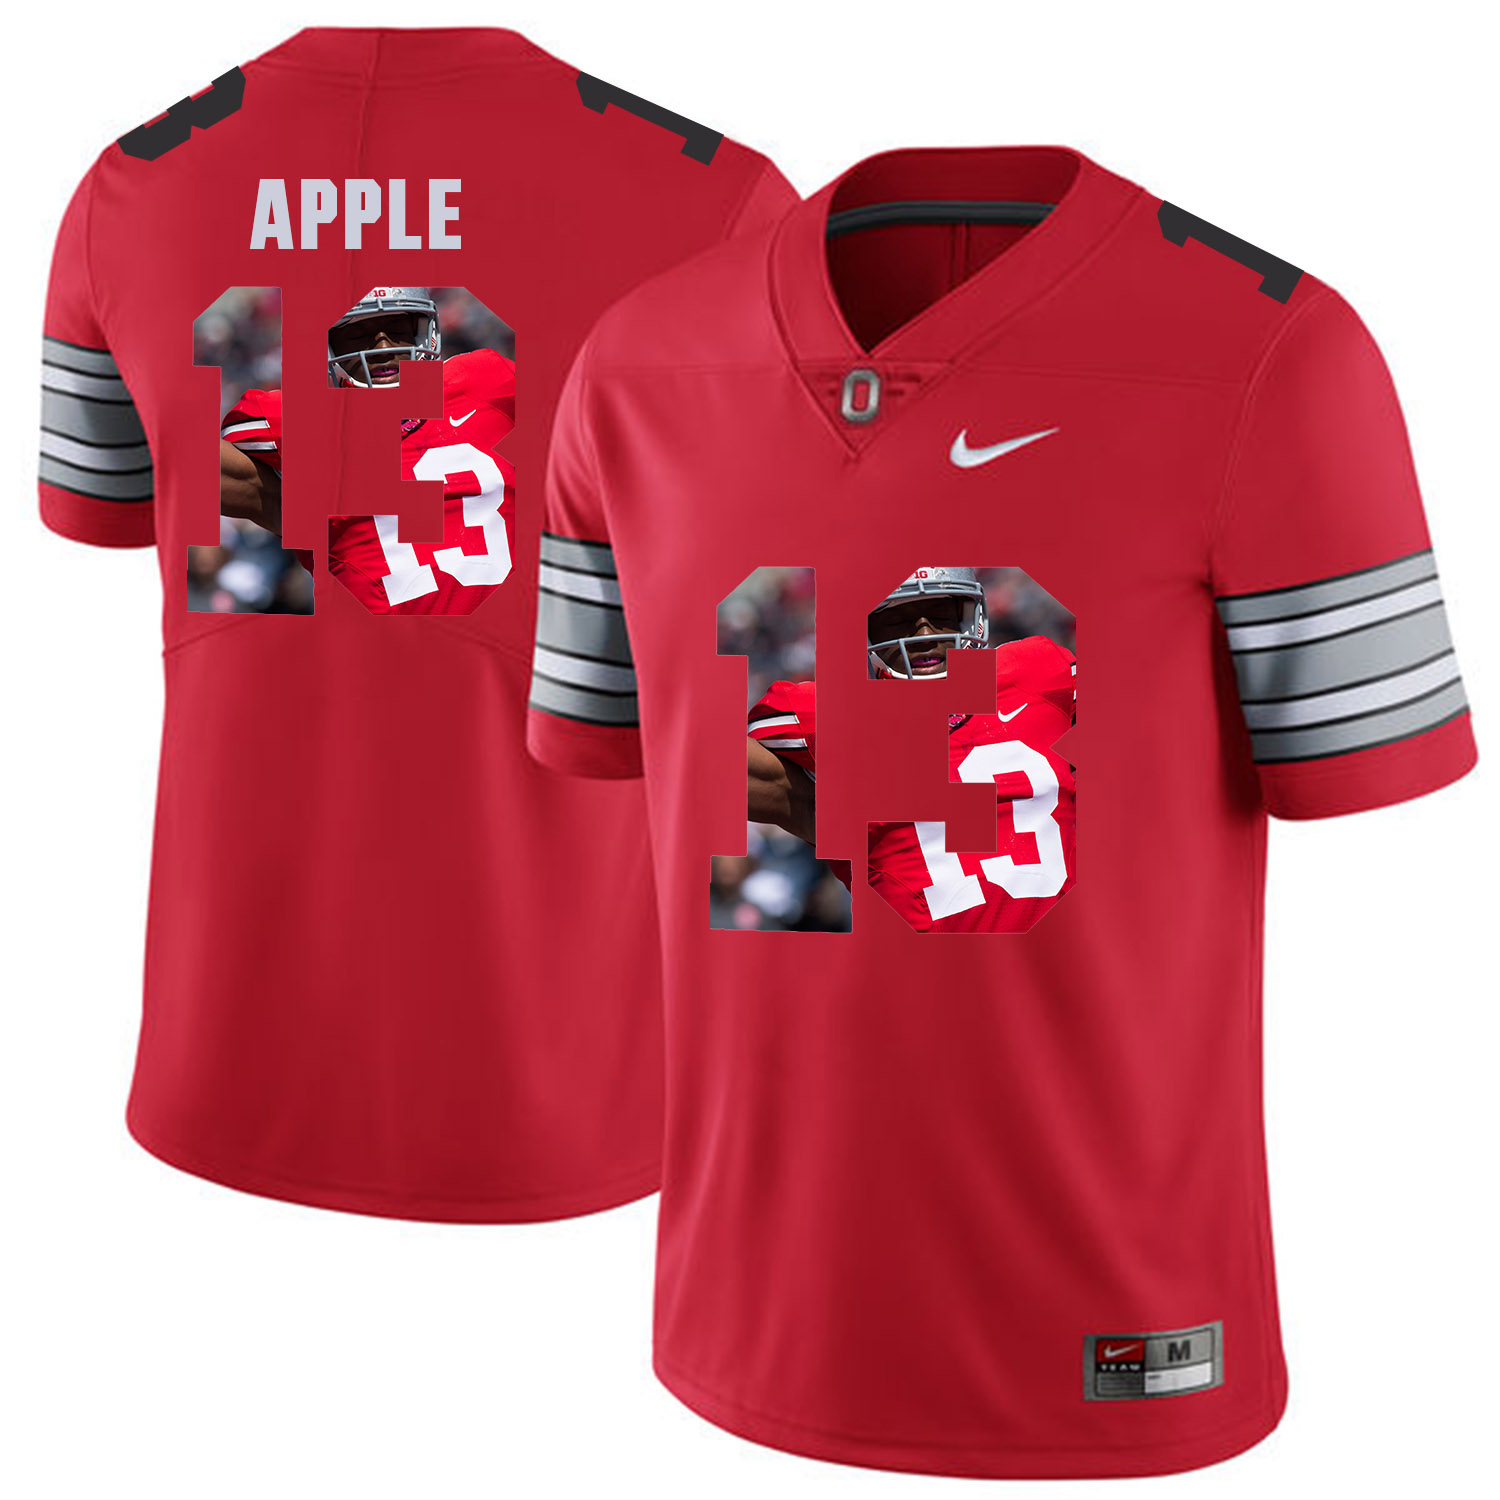 Men Ohio State 13 Apple Red Fashion Edition Customized NCAA Jerseys